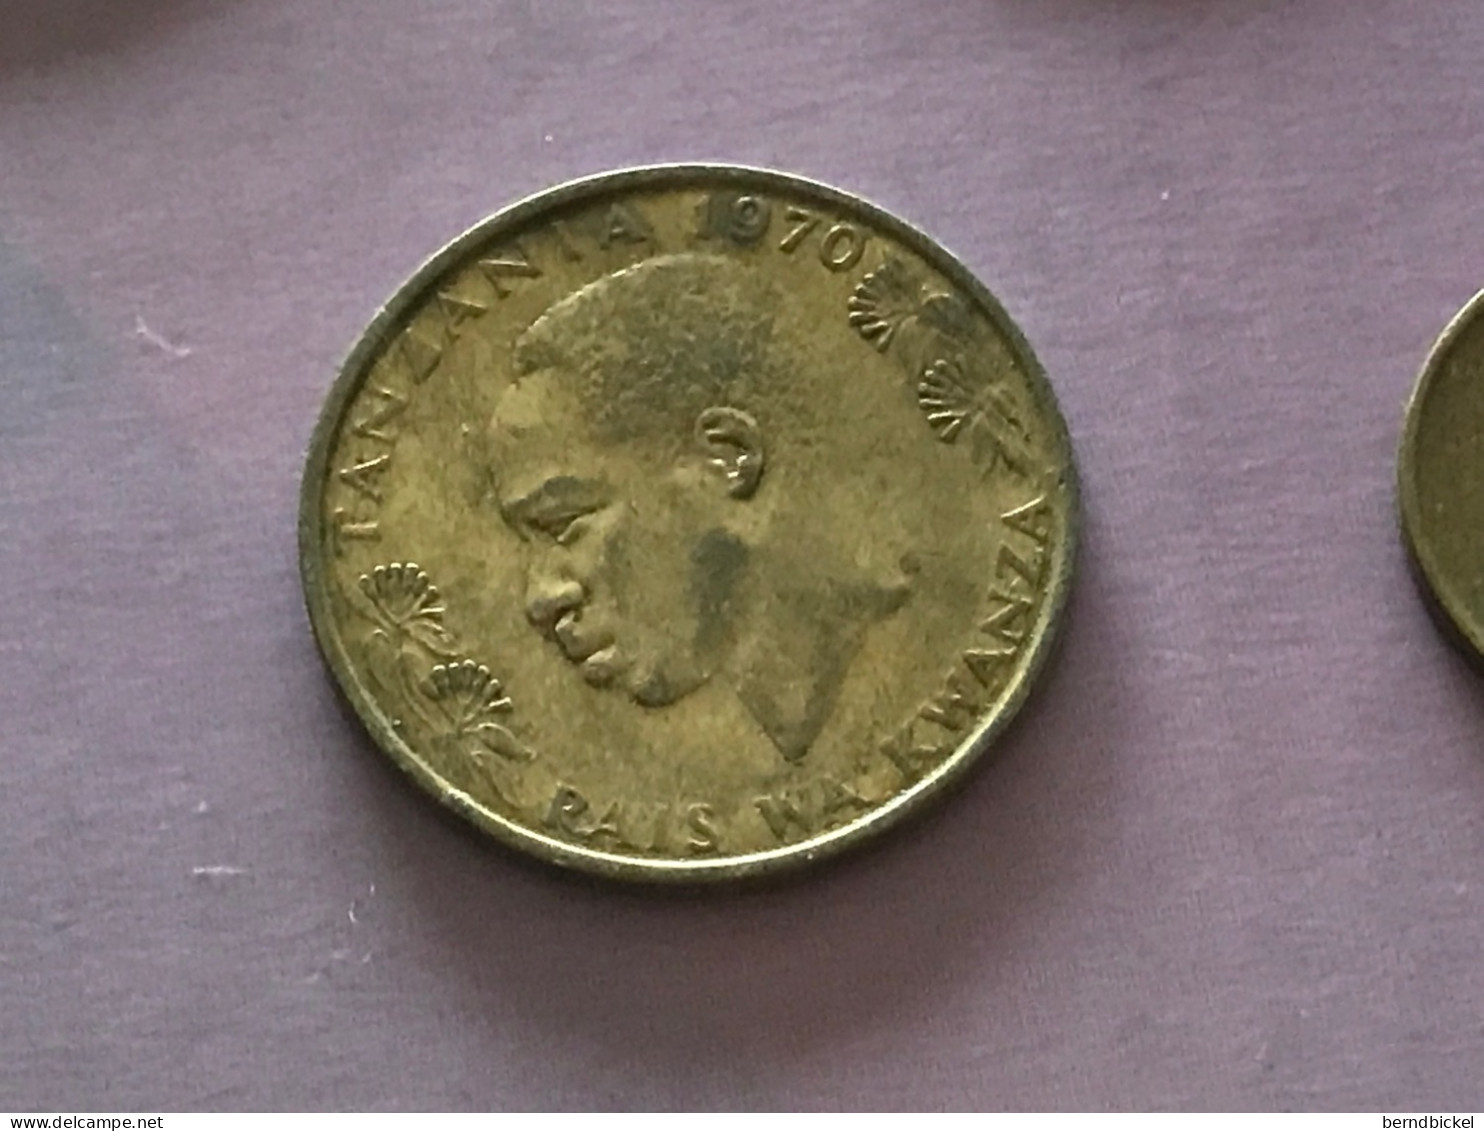 Münze Münzen Umlaufmünze Tansania 20 Cent 1970 - Tanzania